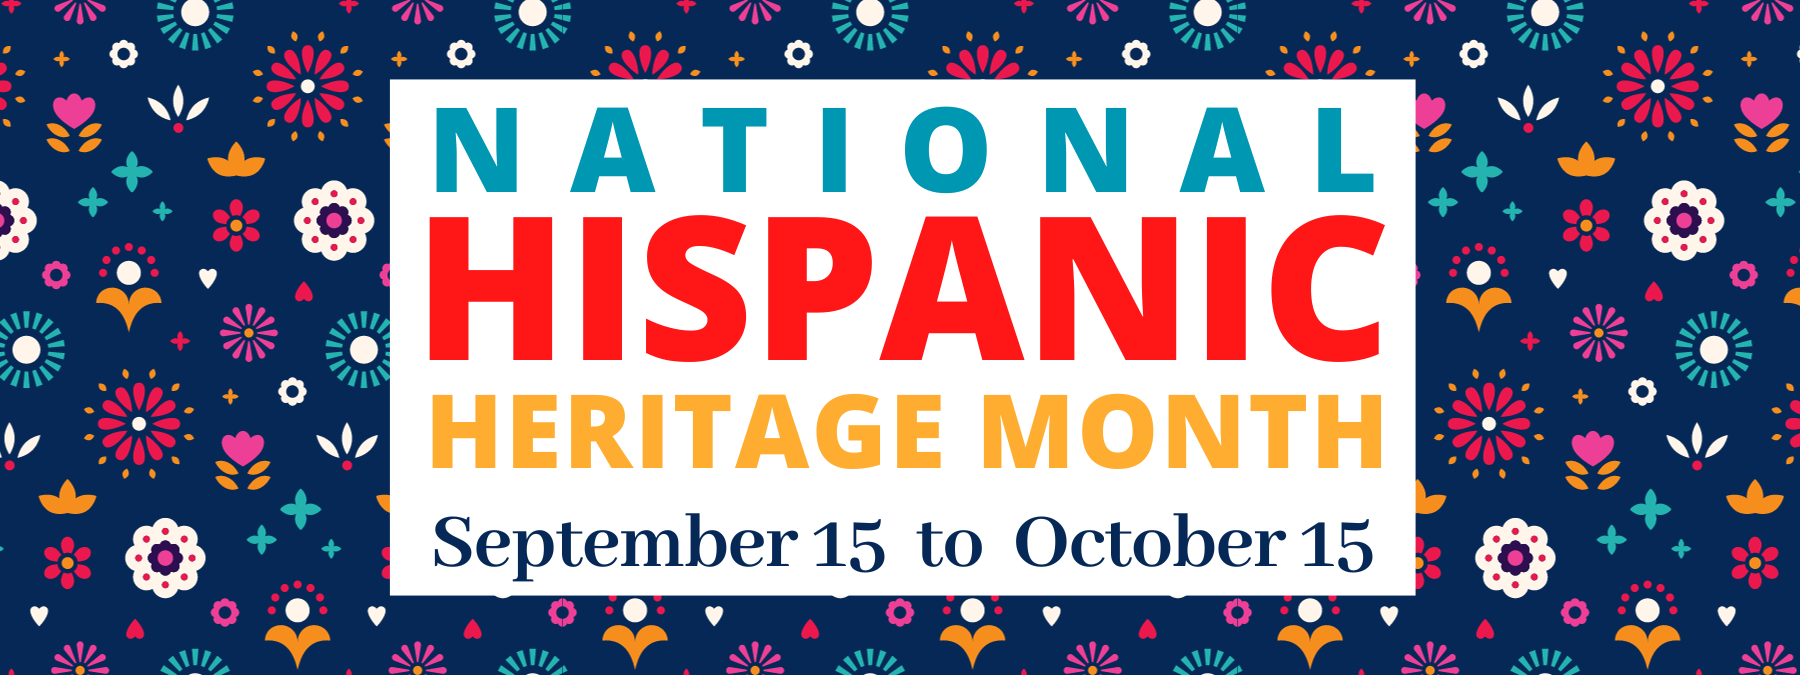 National Hispanic Heritage Month - September 15 to October 15